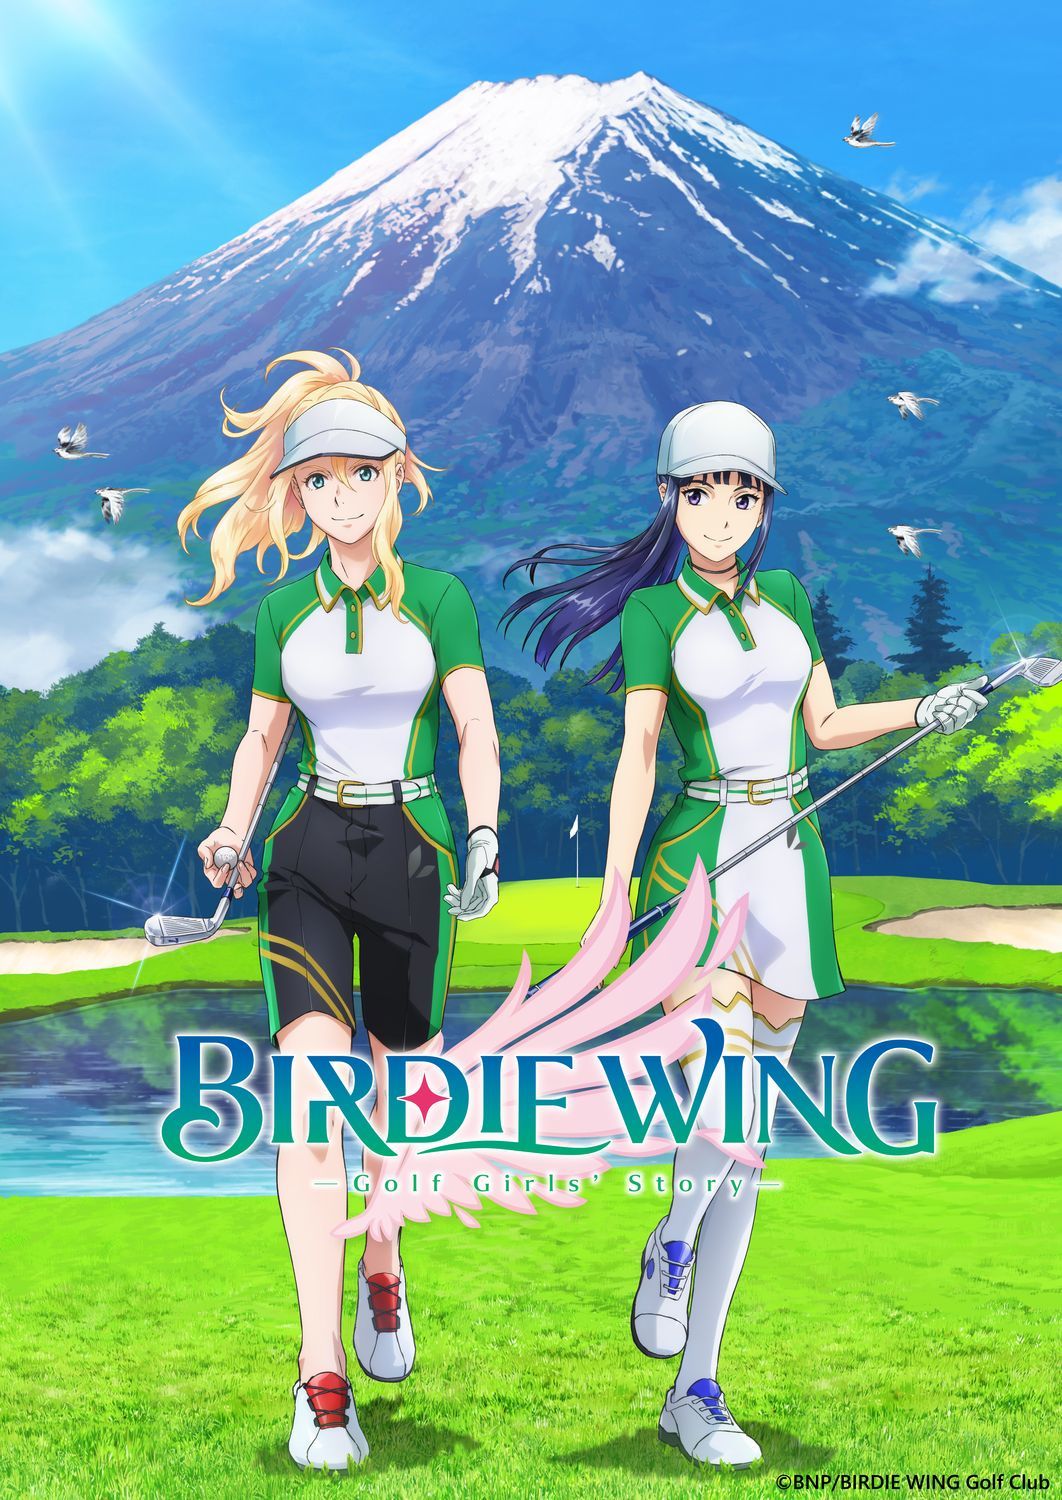 TVアニメ『BIRDIE WING -Golf Girls' Story-』Season 2ティザービジュアル